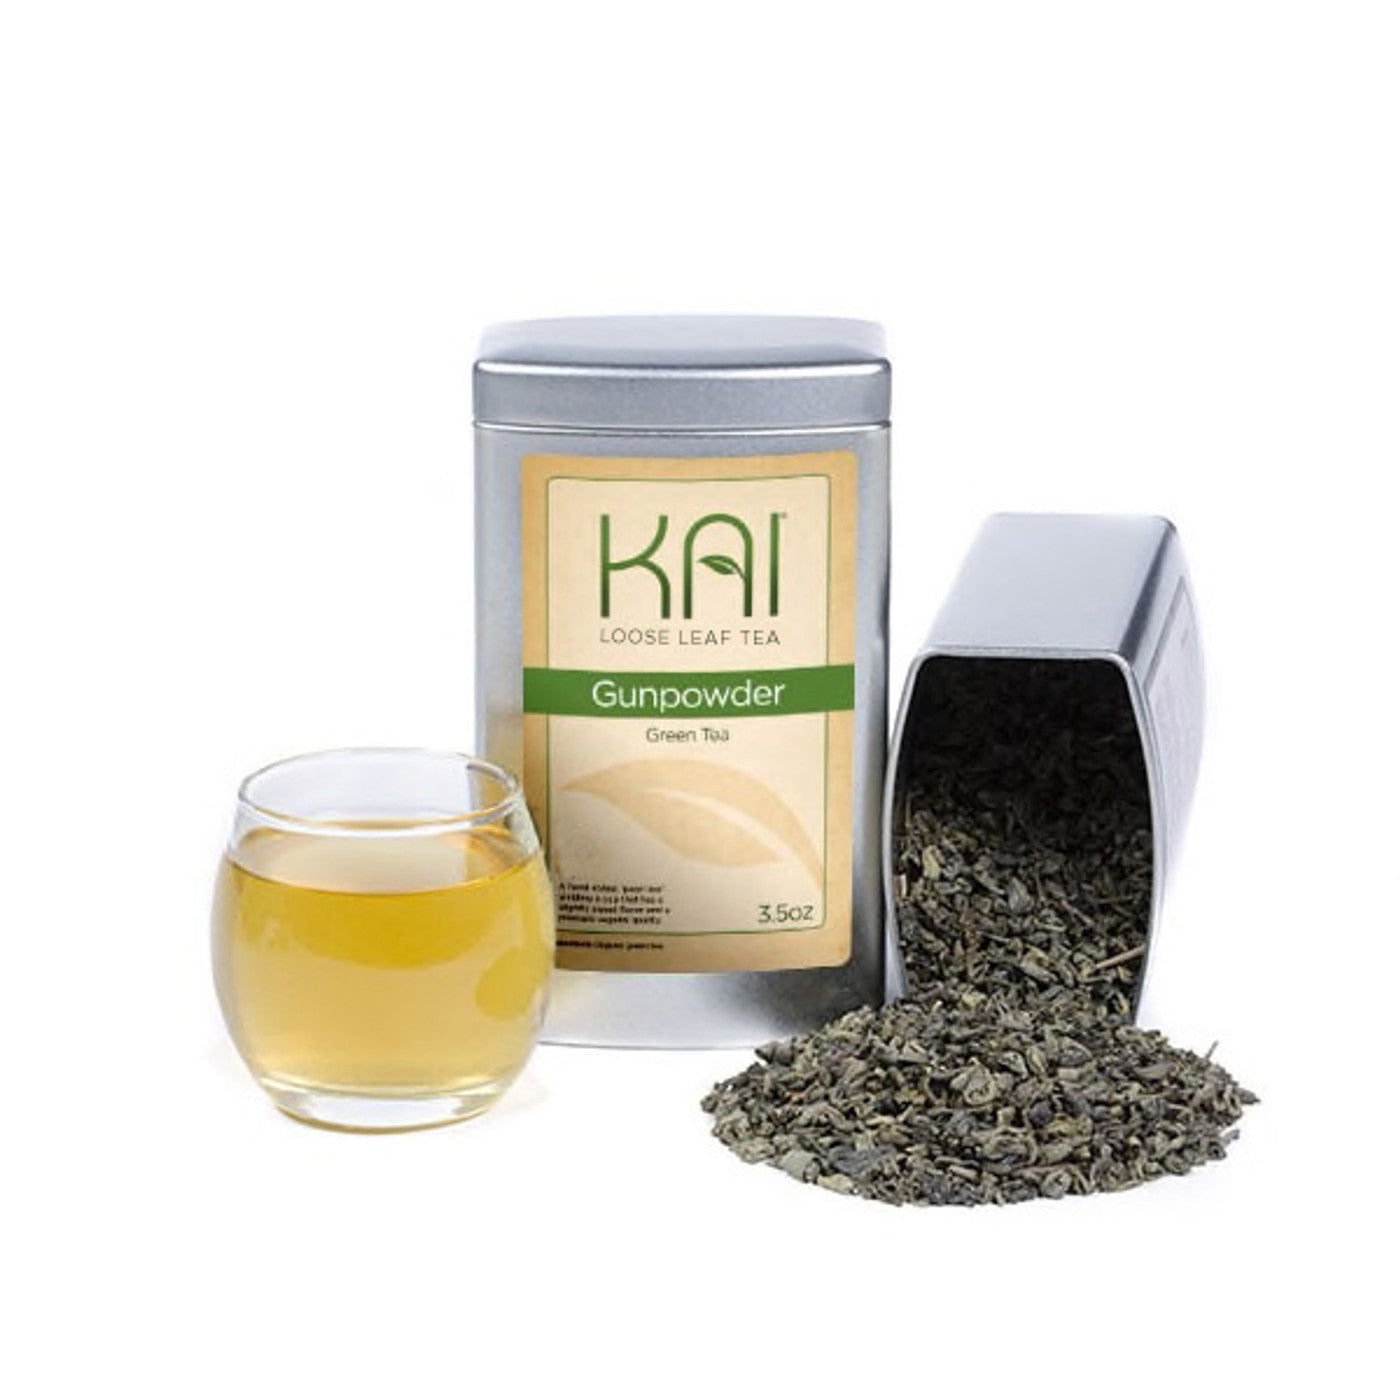 Kai Loose Leaf Tea - Gunpowder Green